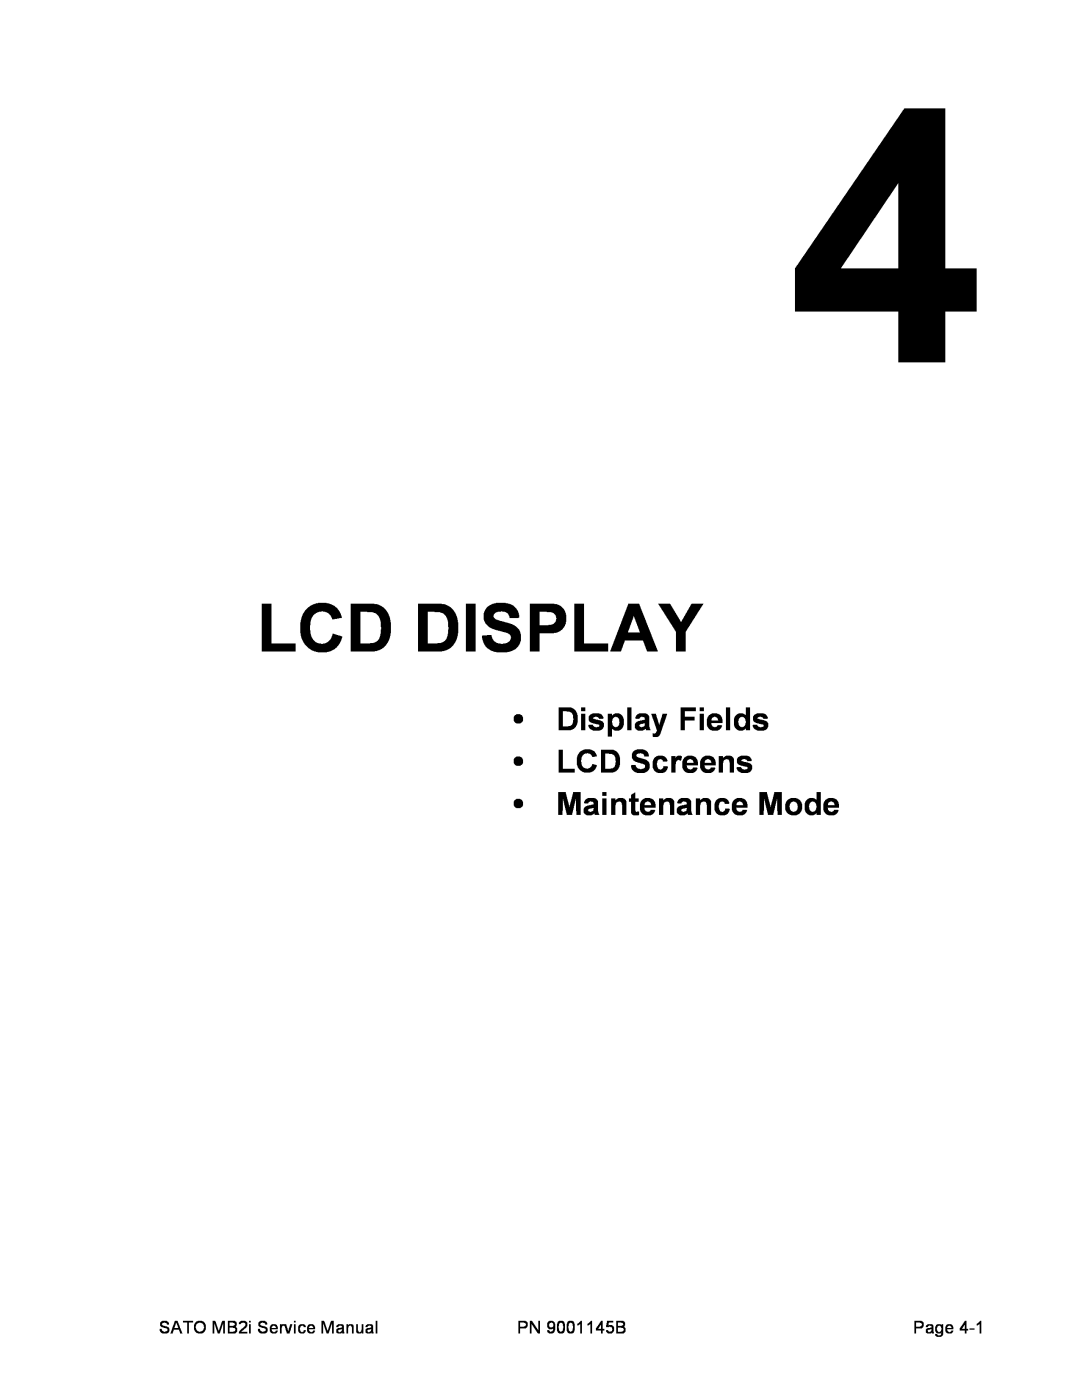 SATO 200i manual Lcd Display, Display Fields LCD Screens Maintenance Mode 